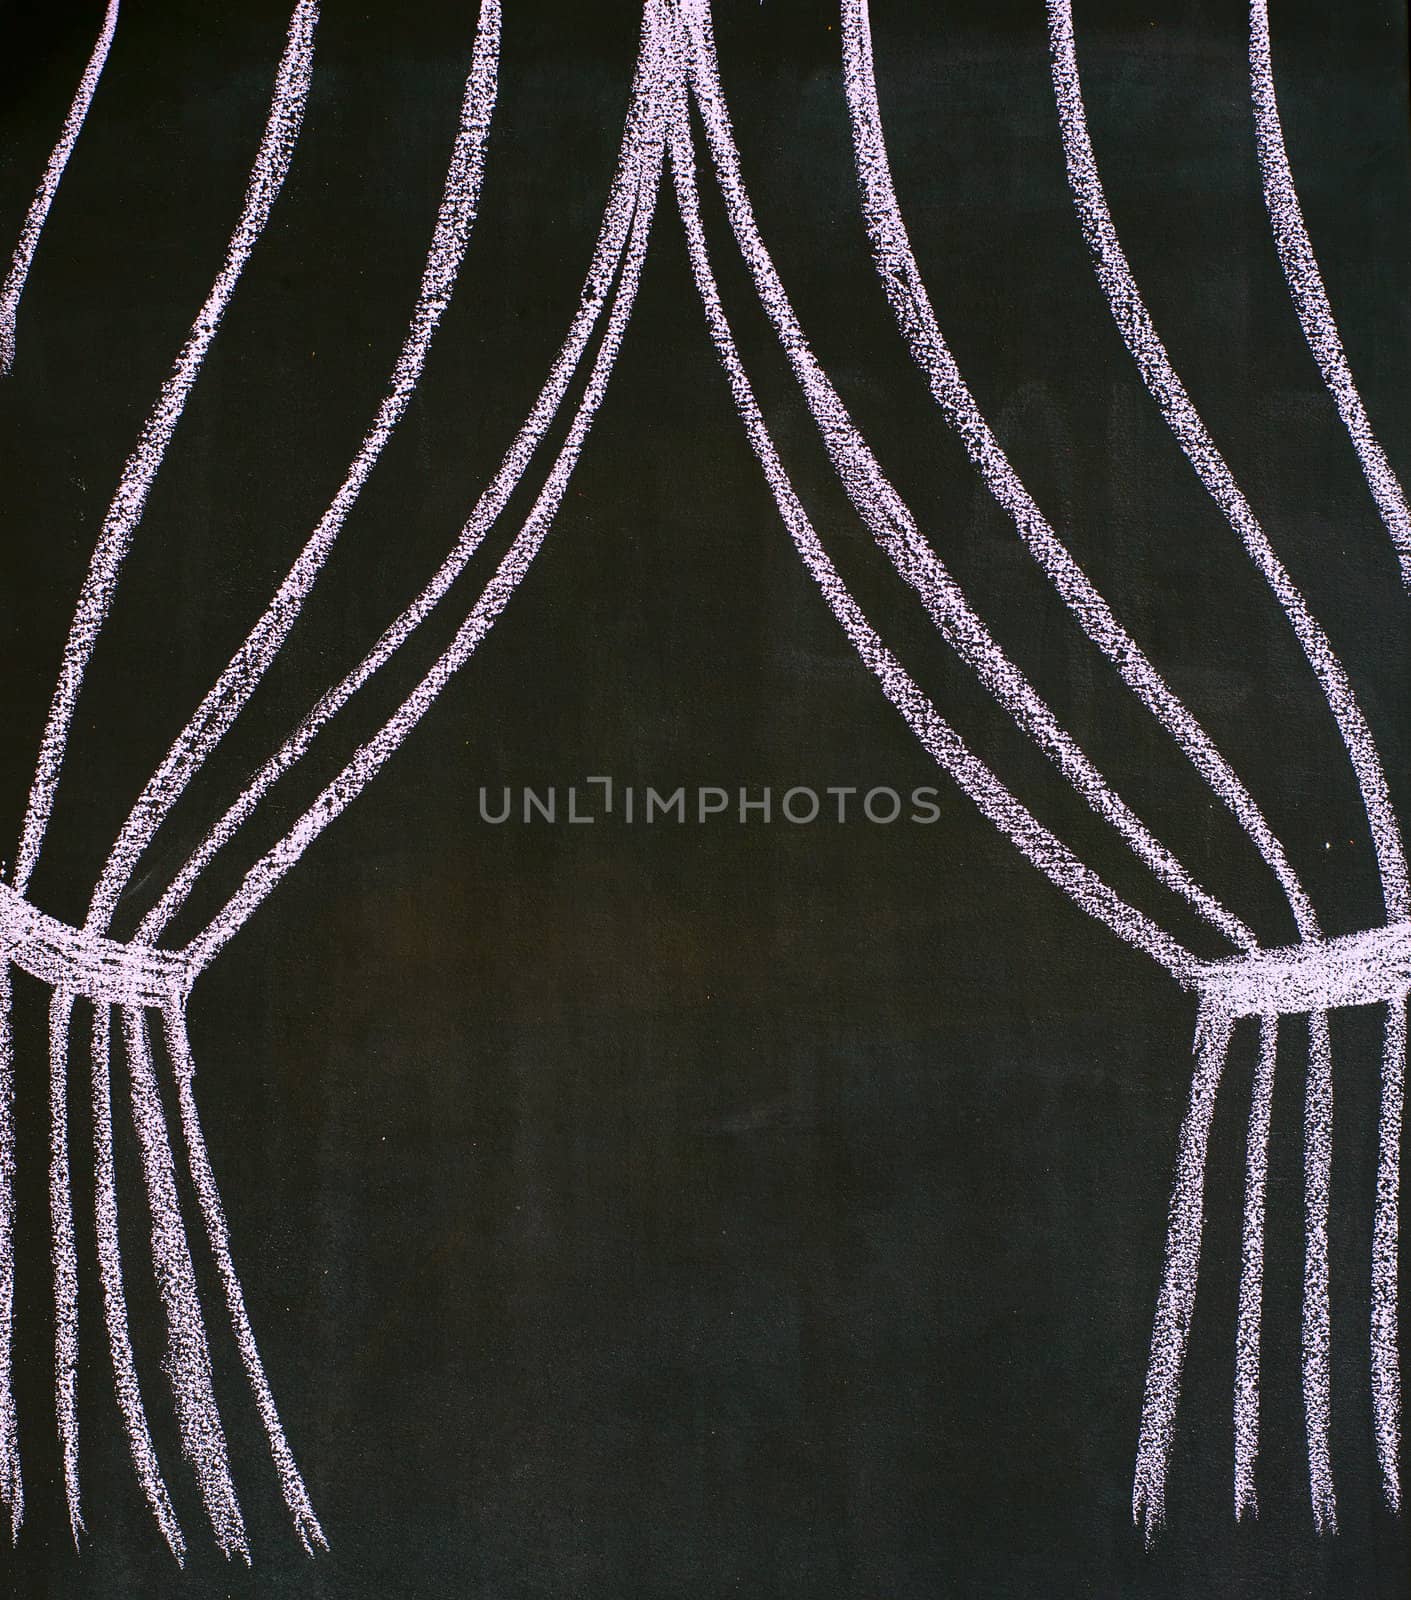 Theatrical curtains drawn on a blackboard